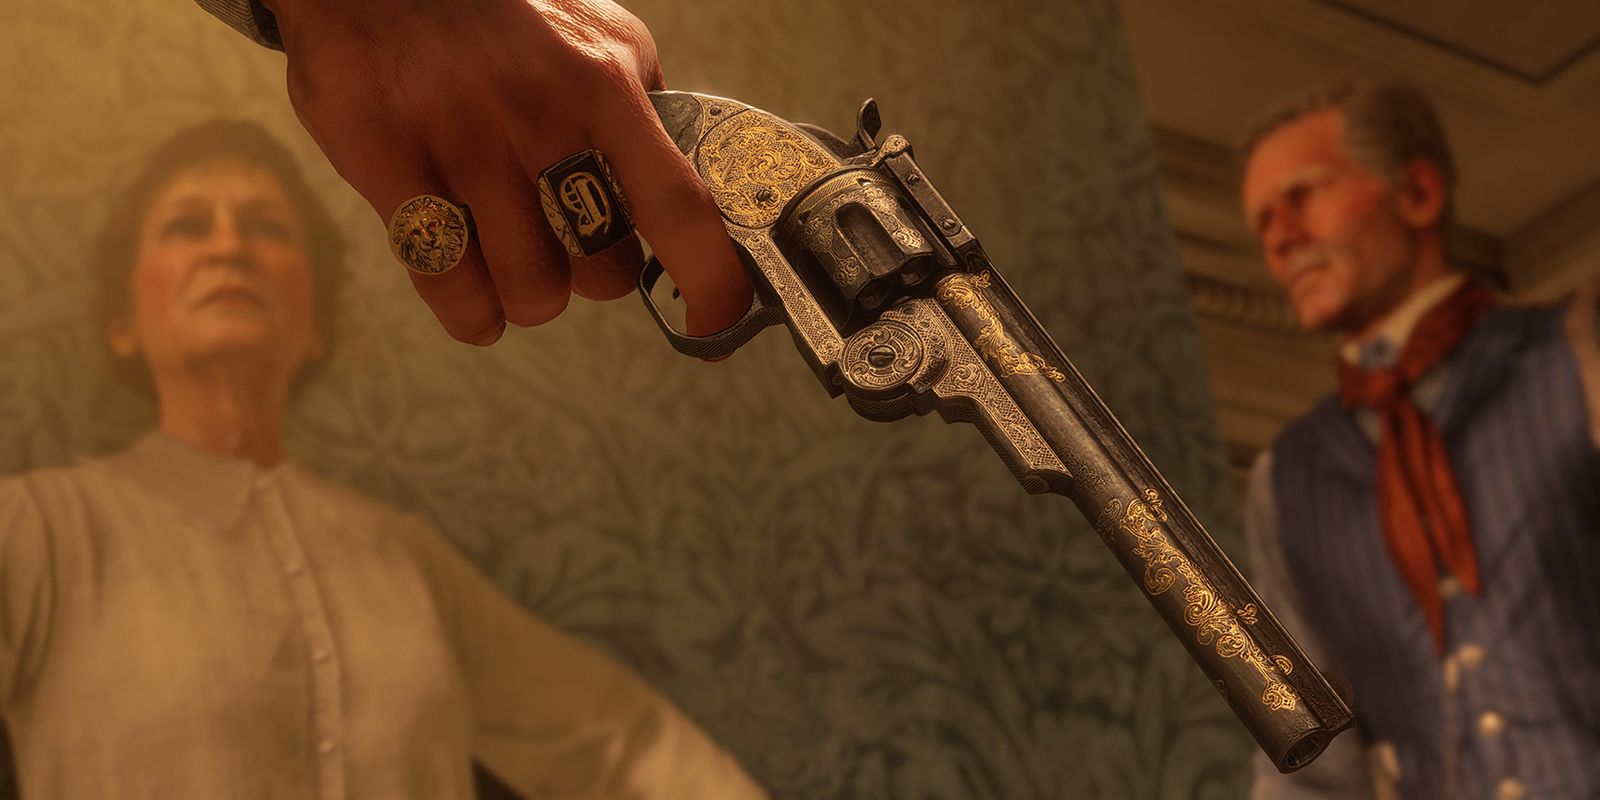 Dutch has a pair of ornate Schofield Revolvers